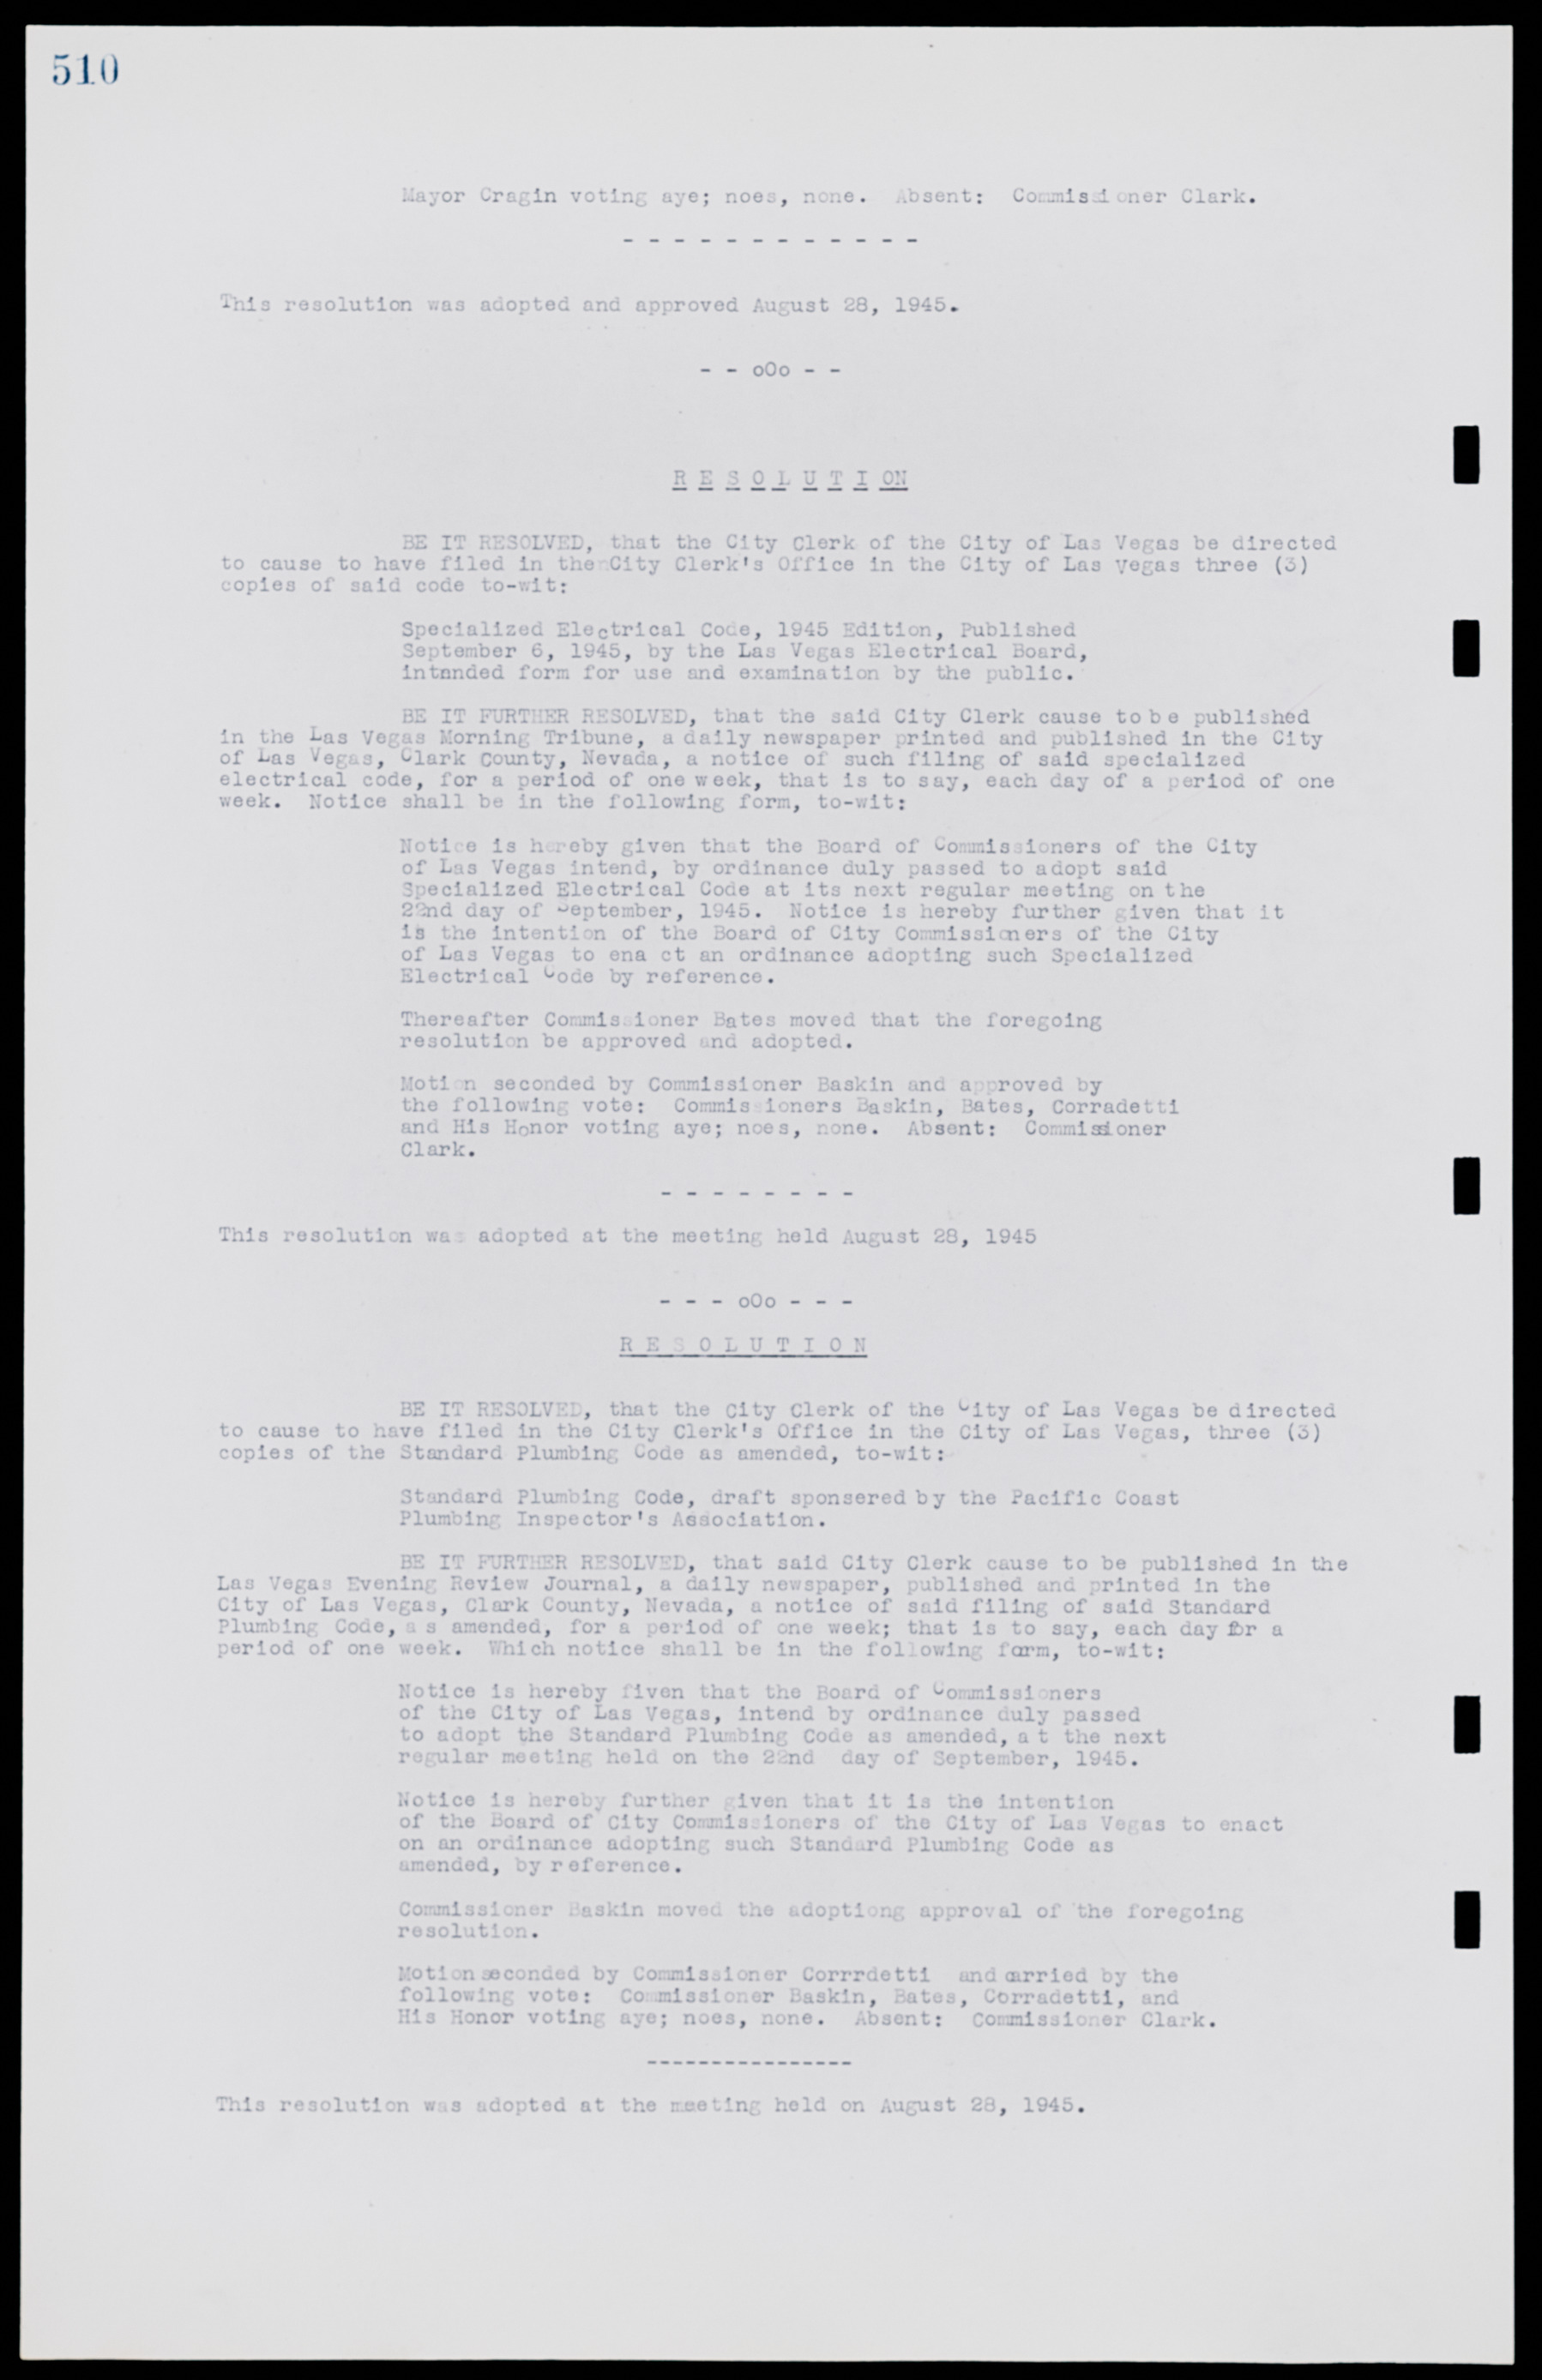 Las Vegas City Commission Minutes, January 7, 1947 to October 26, 1949, lvc000006-540